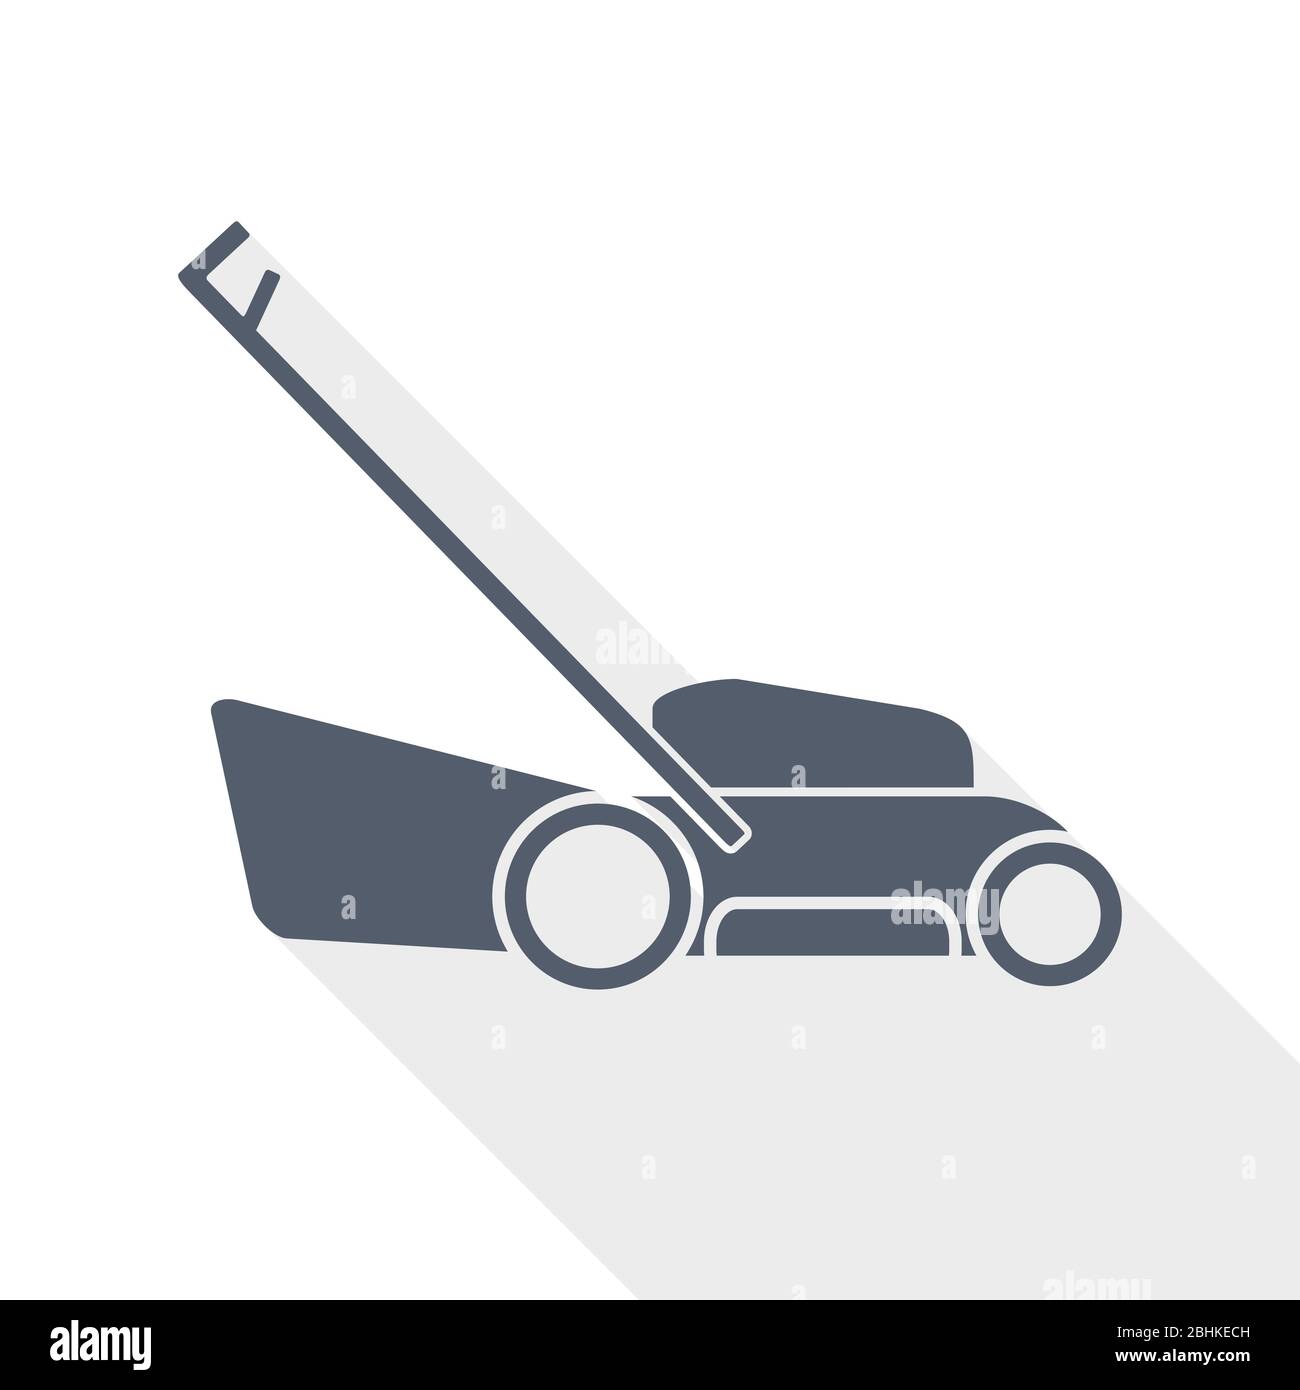 Lawn mower flat design vector illustration Stock Vector